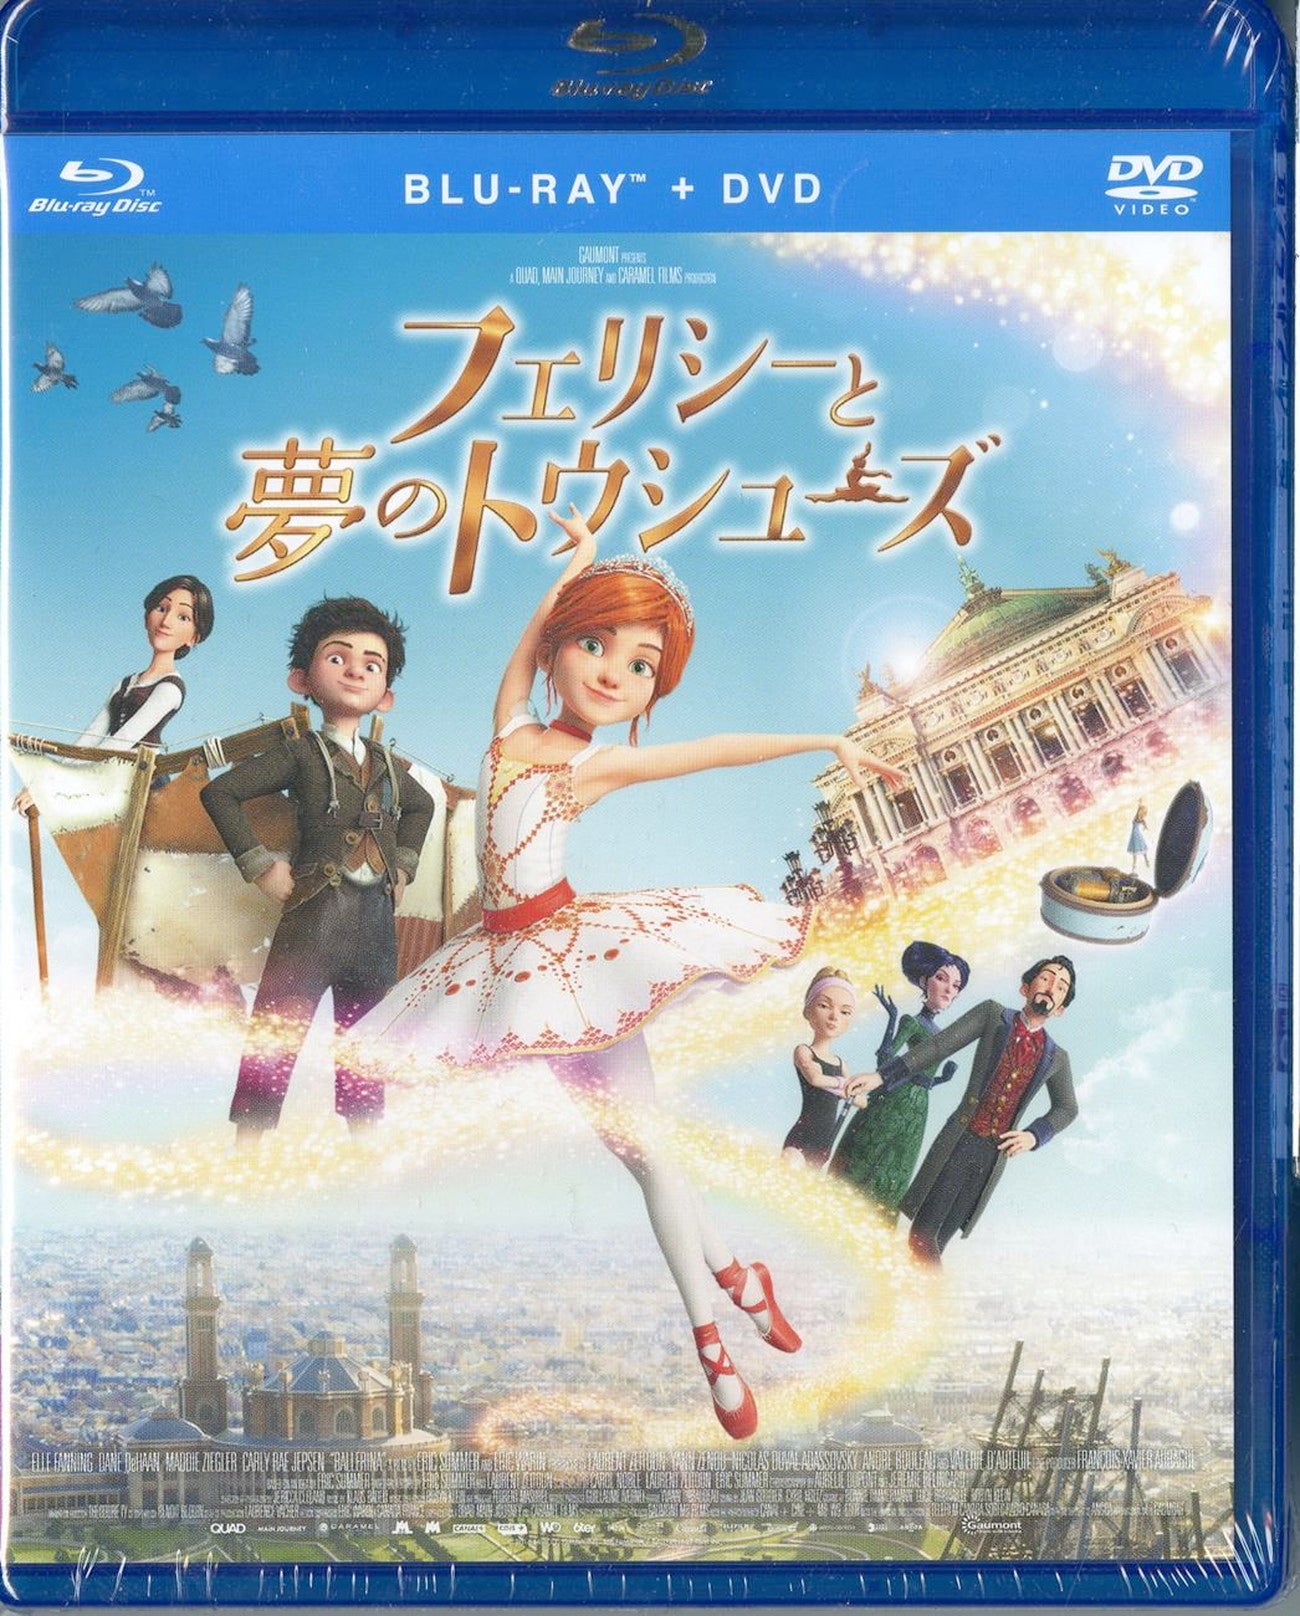 Animation - Ballerina Blu-ray + DVD Set - Japan Blu-ray Disc+DVD